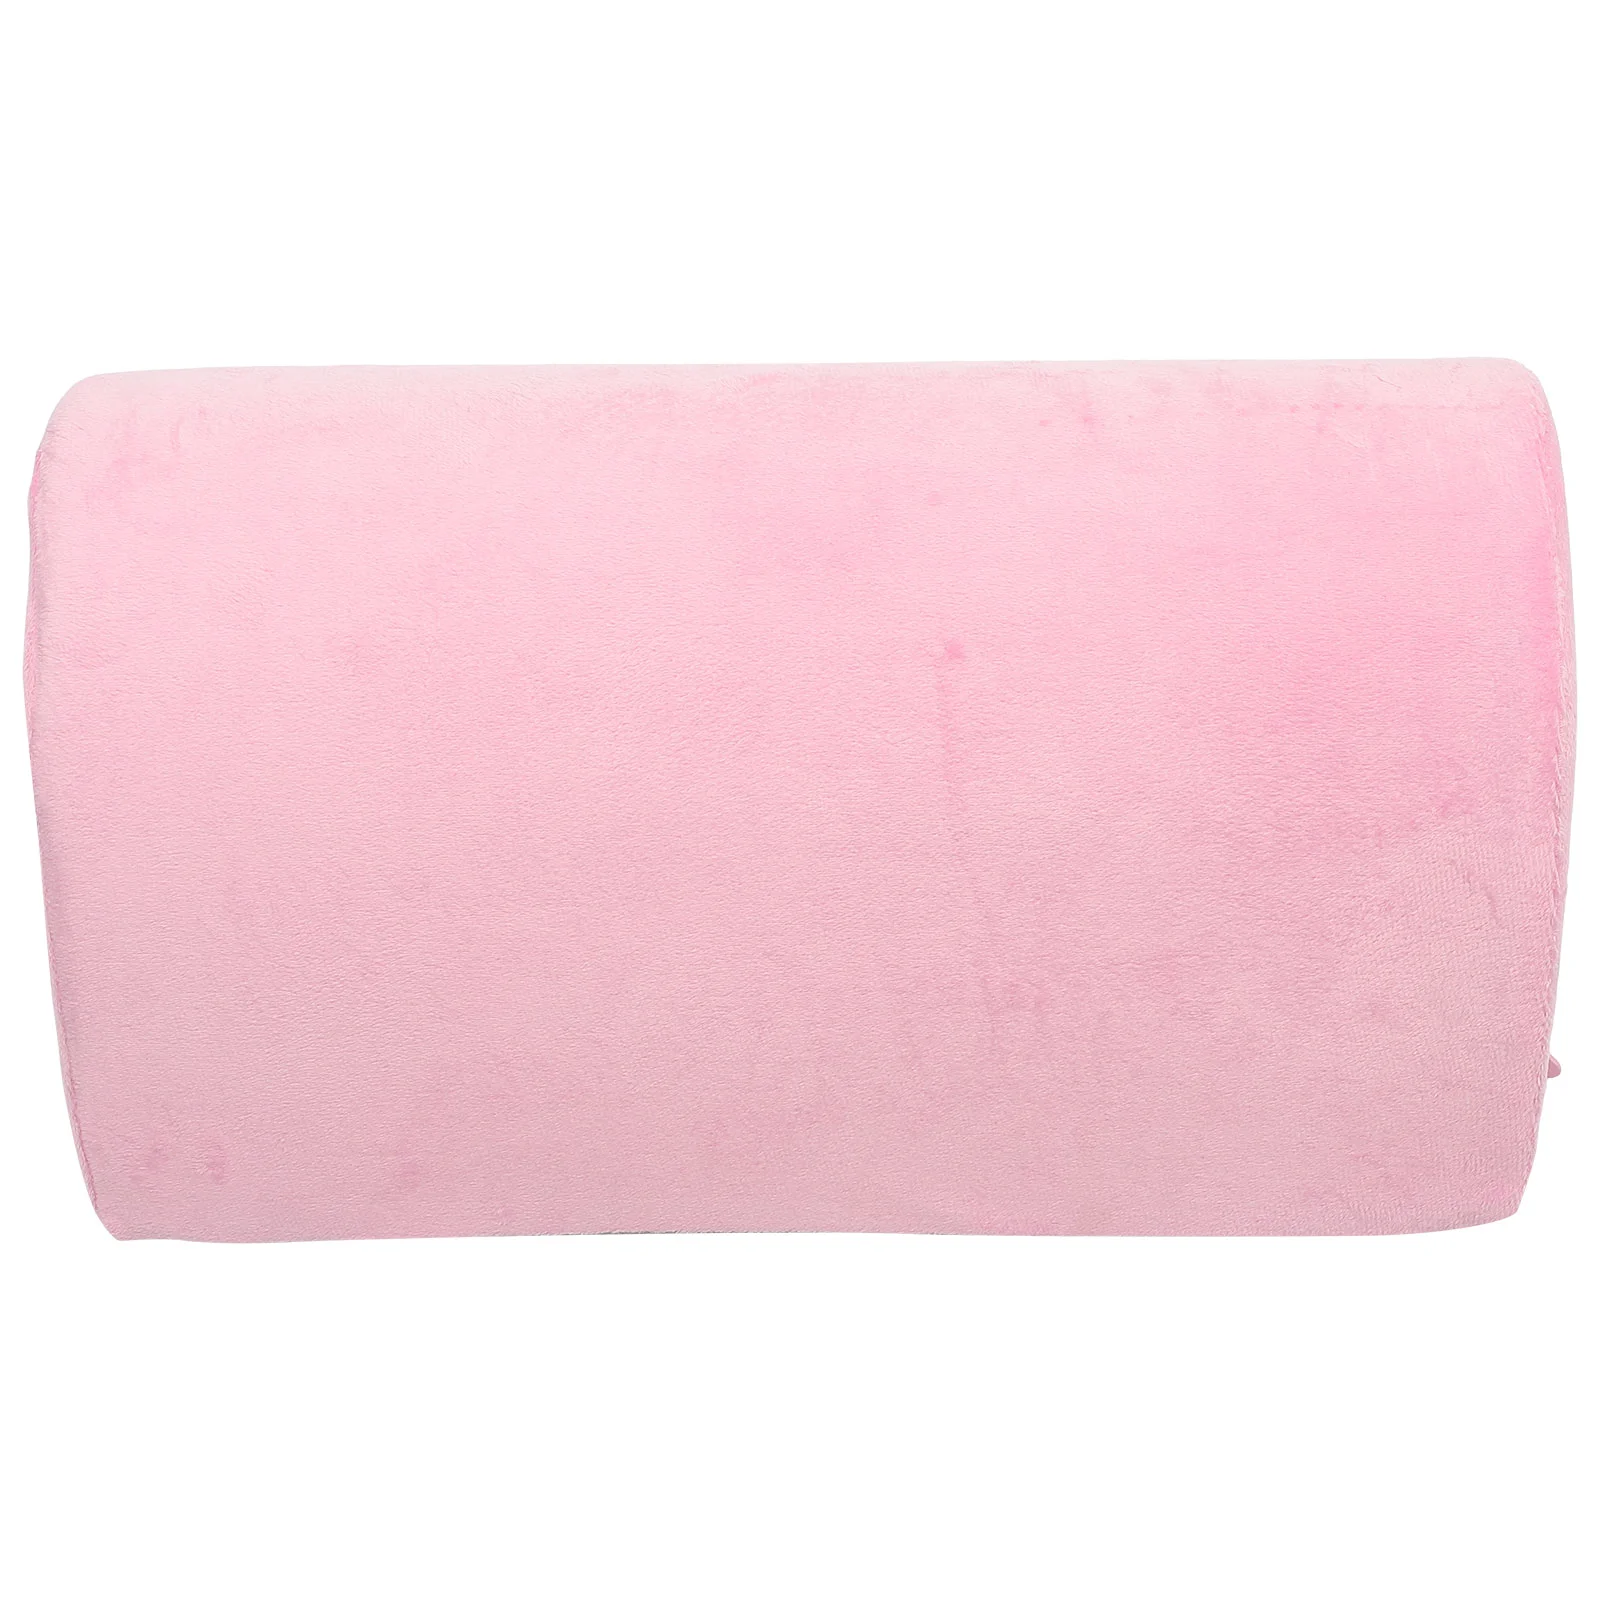 Foot Pillow Cushion Support Office Necessities Supplies Crystal Velvet under Desk Pad Comfort